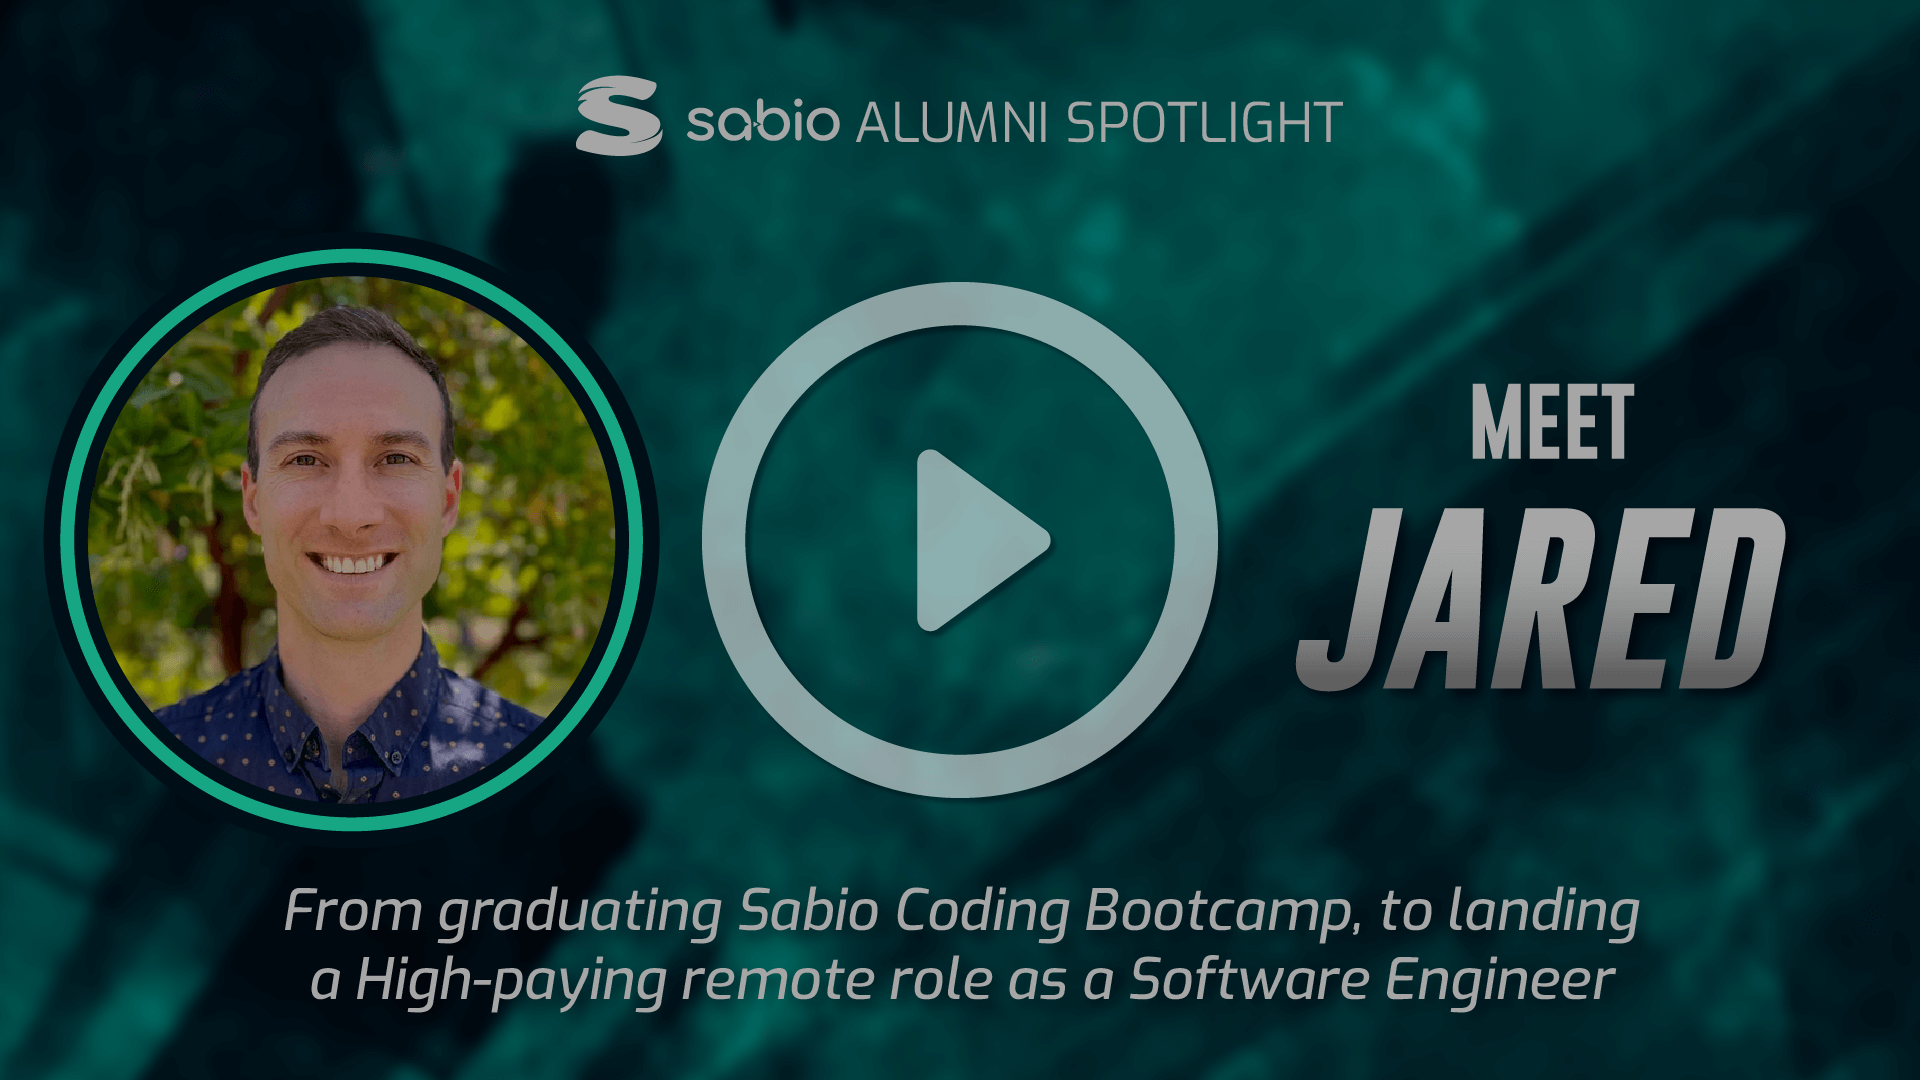 Sabio Alumni Spotlight: Jared. Play symbol overlaid to the image.